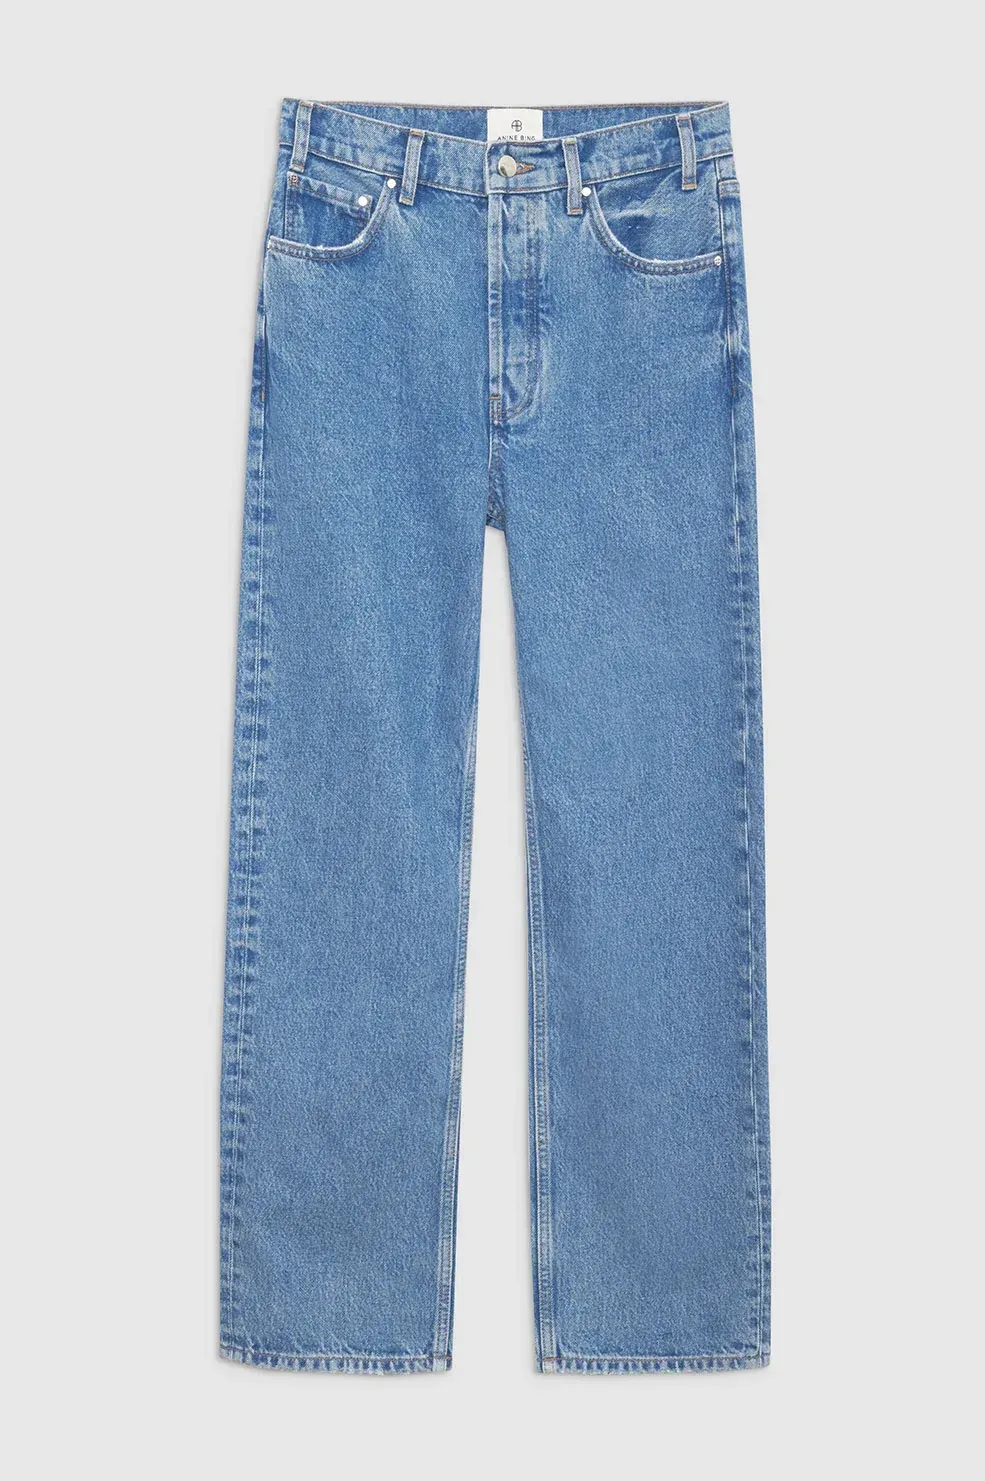 Pantalon de designer AB Annes Bing Womens Hugh Jeans Femmes Lavage Blue High Wide-Ligged Brand Brand haut de gamme 163